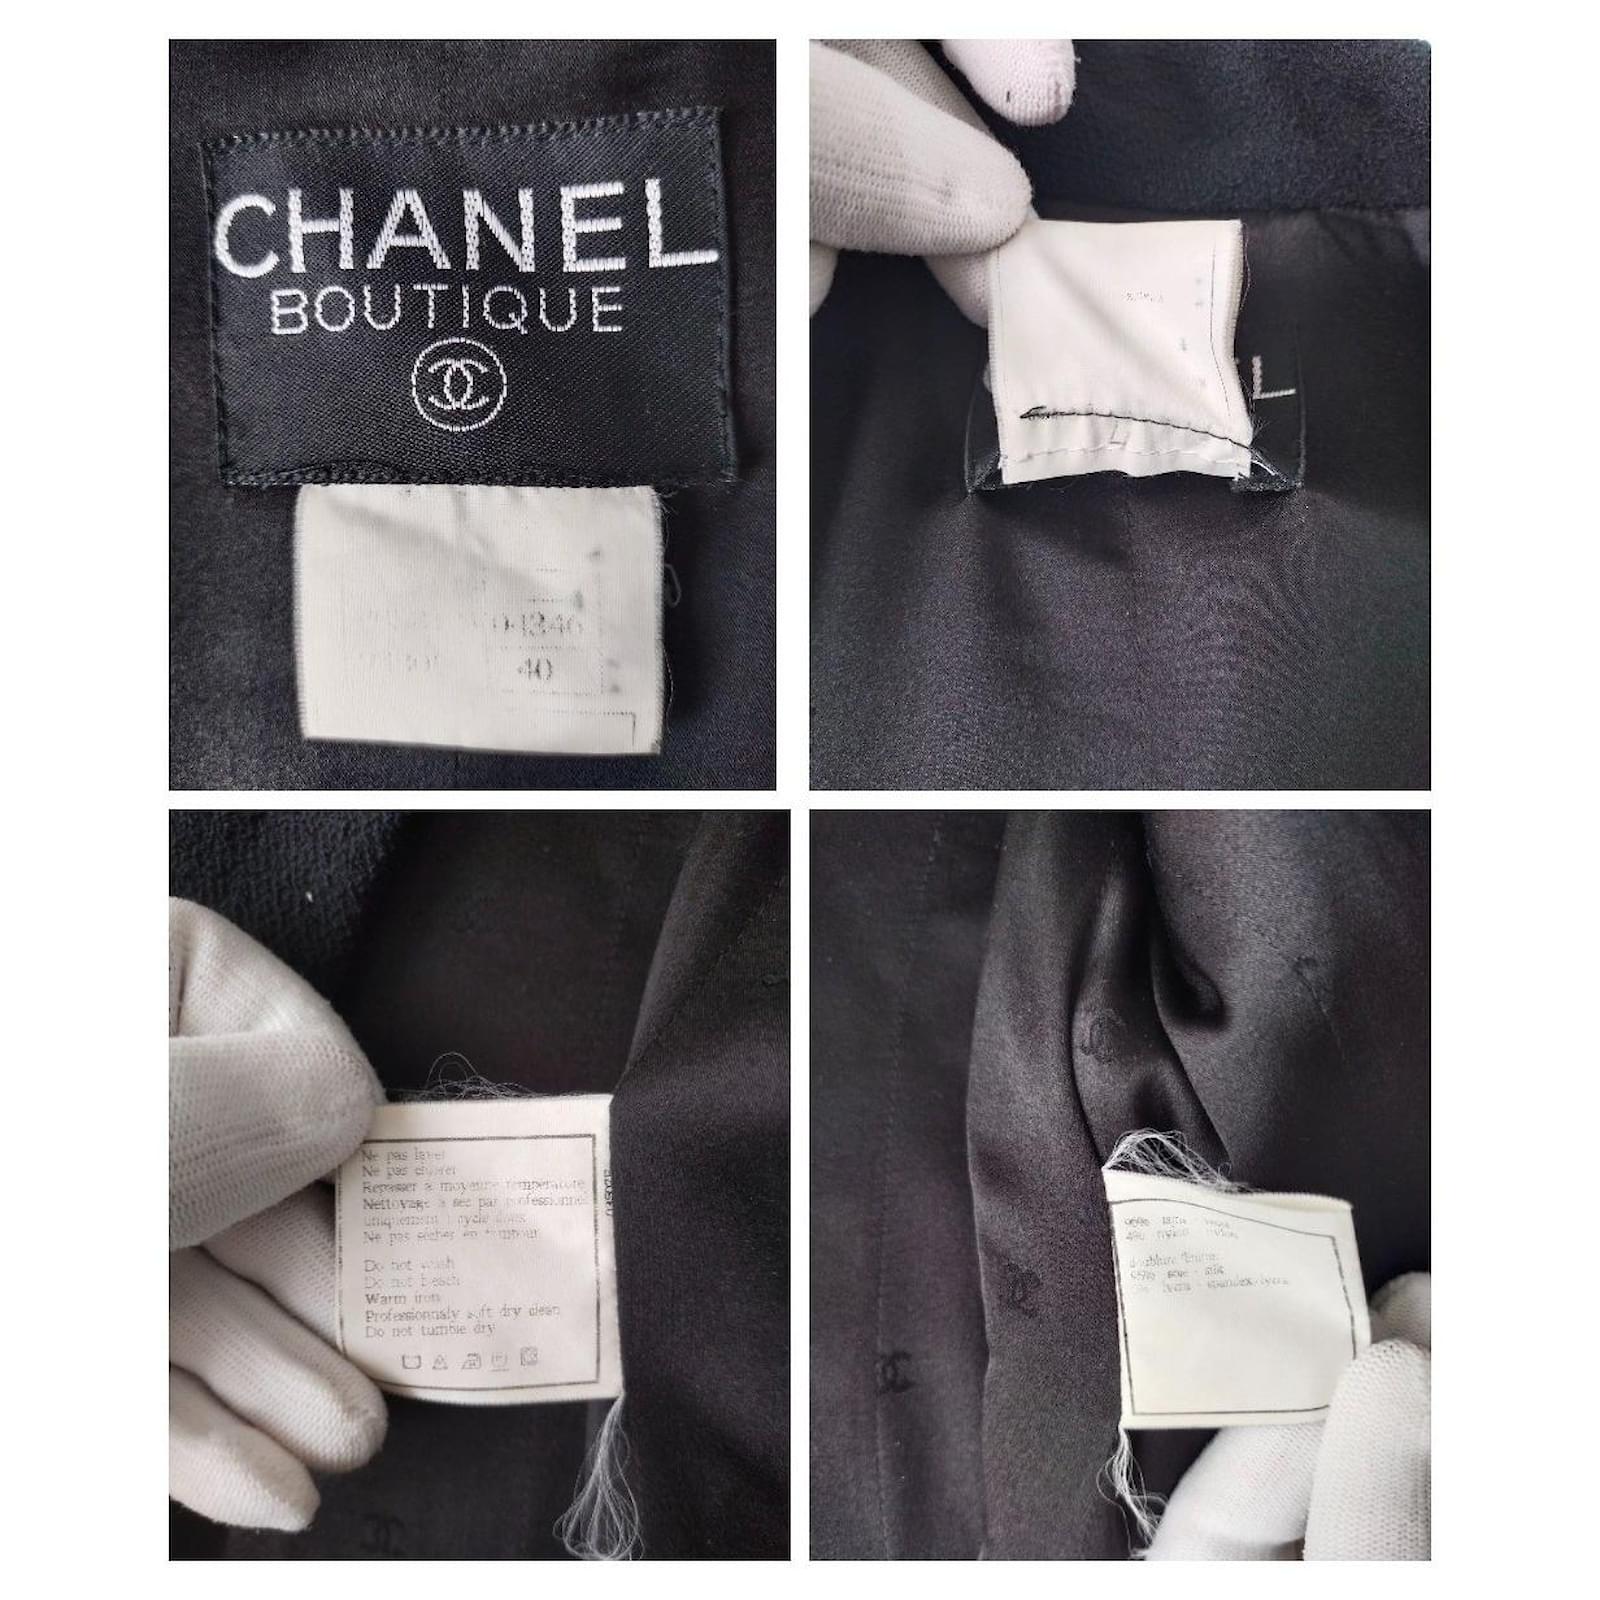 Jackets Chanel 9K$ Paris/Versailles Tweed Jacket Size 38 FR